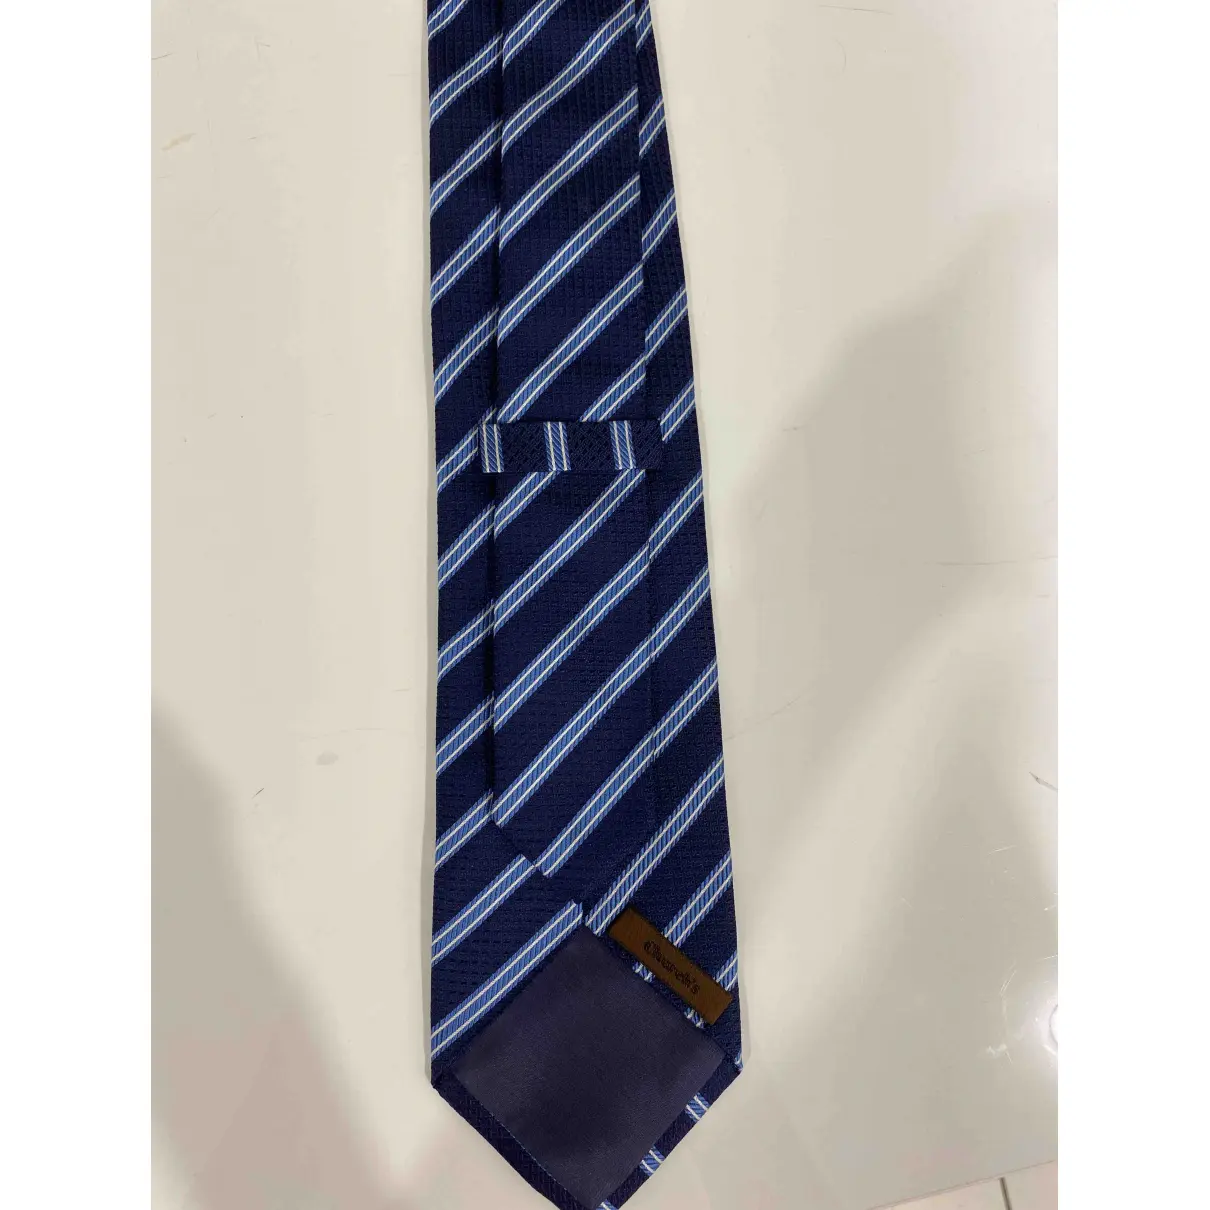 Buy Church's Silk tie online - Vintage